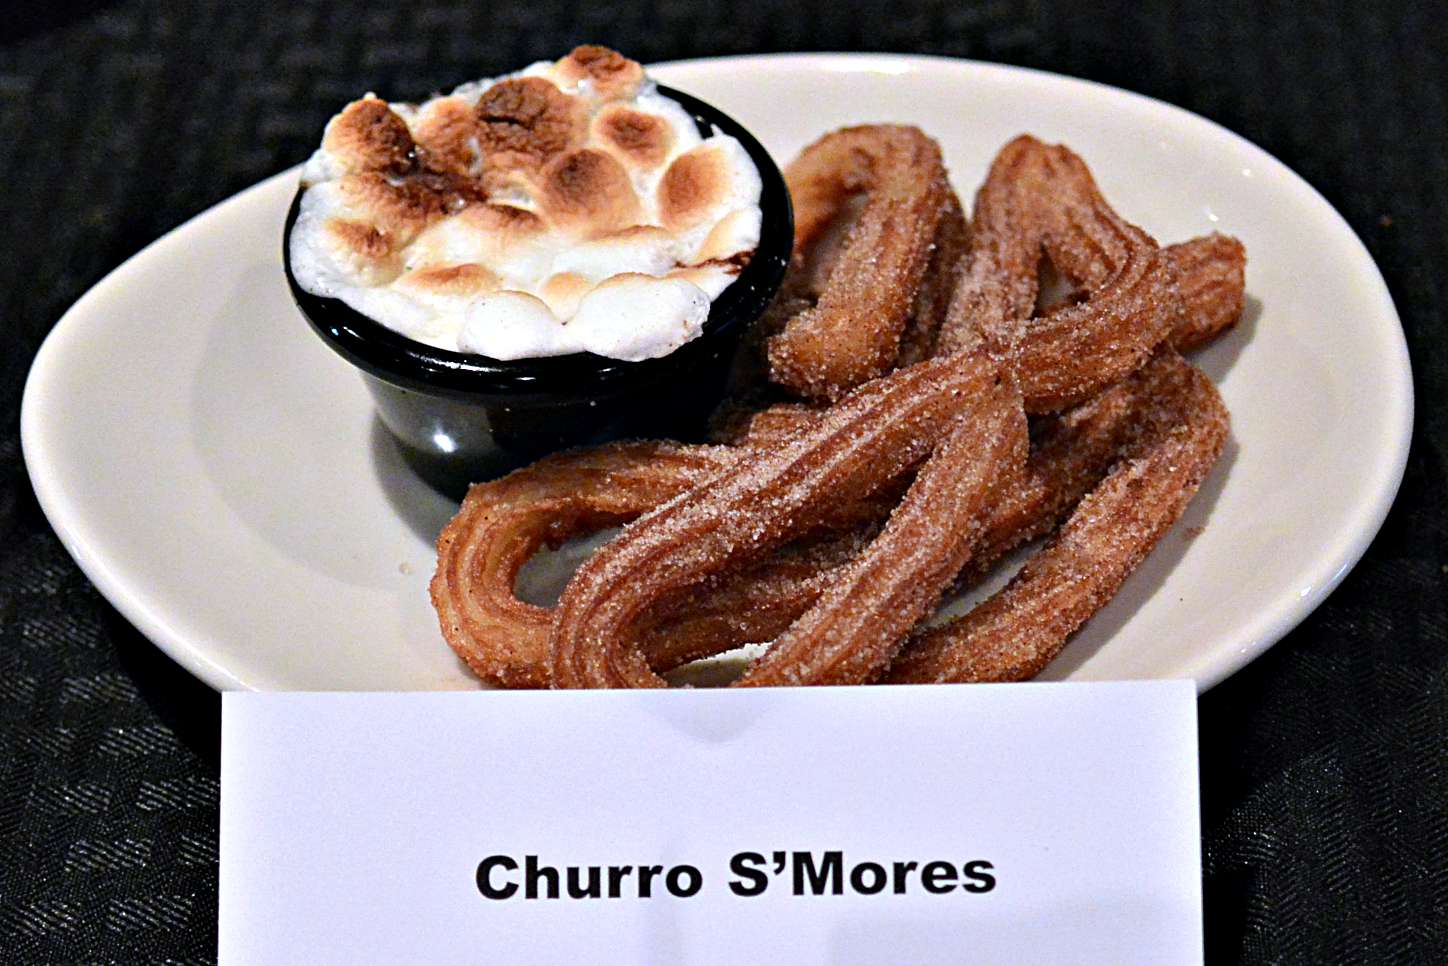 Churro S'Mores - Free Appetizer Sampling at Applebee's July 21, 2015 #TasteTheChange